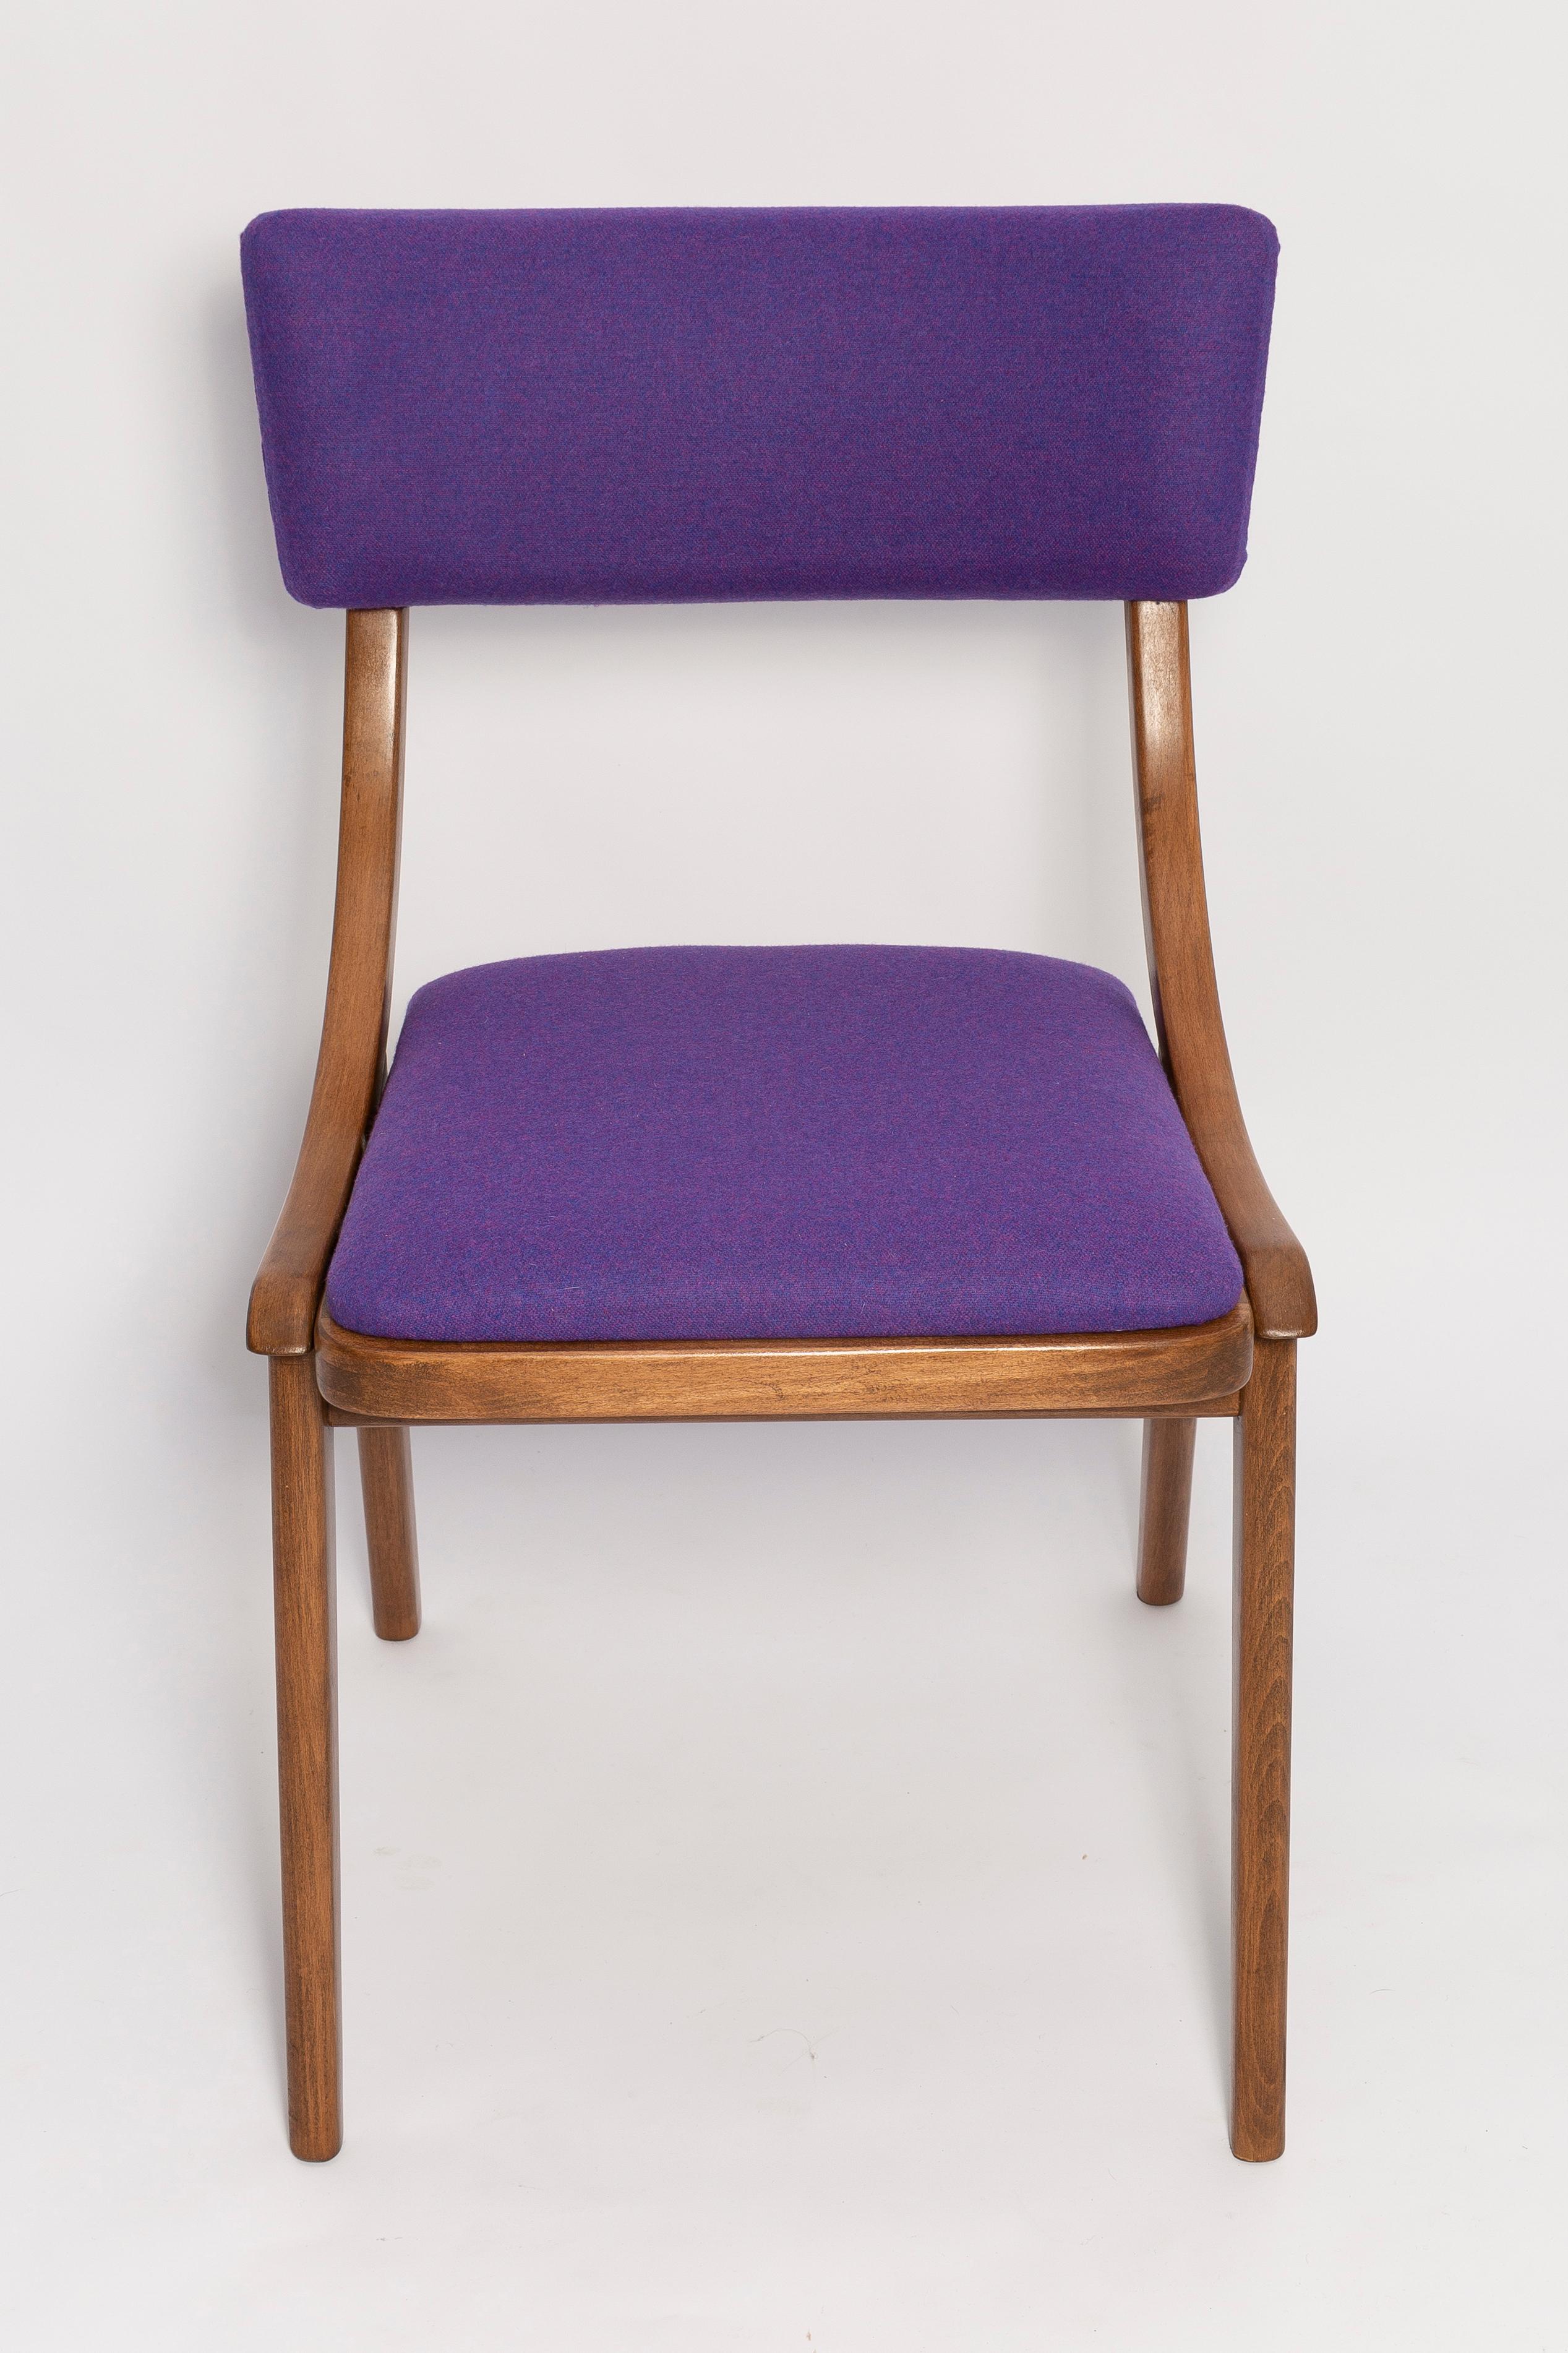 MY MODERN Stuhl Bumerang, lila-violette Wolle, Polen, 1960er Jahre (Textil) im Angebot